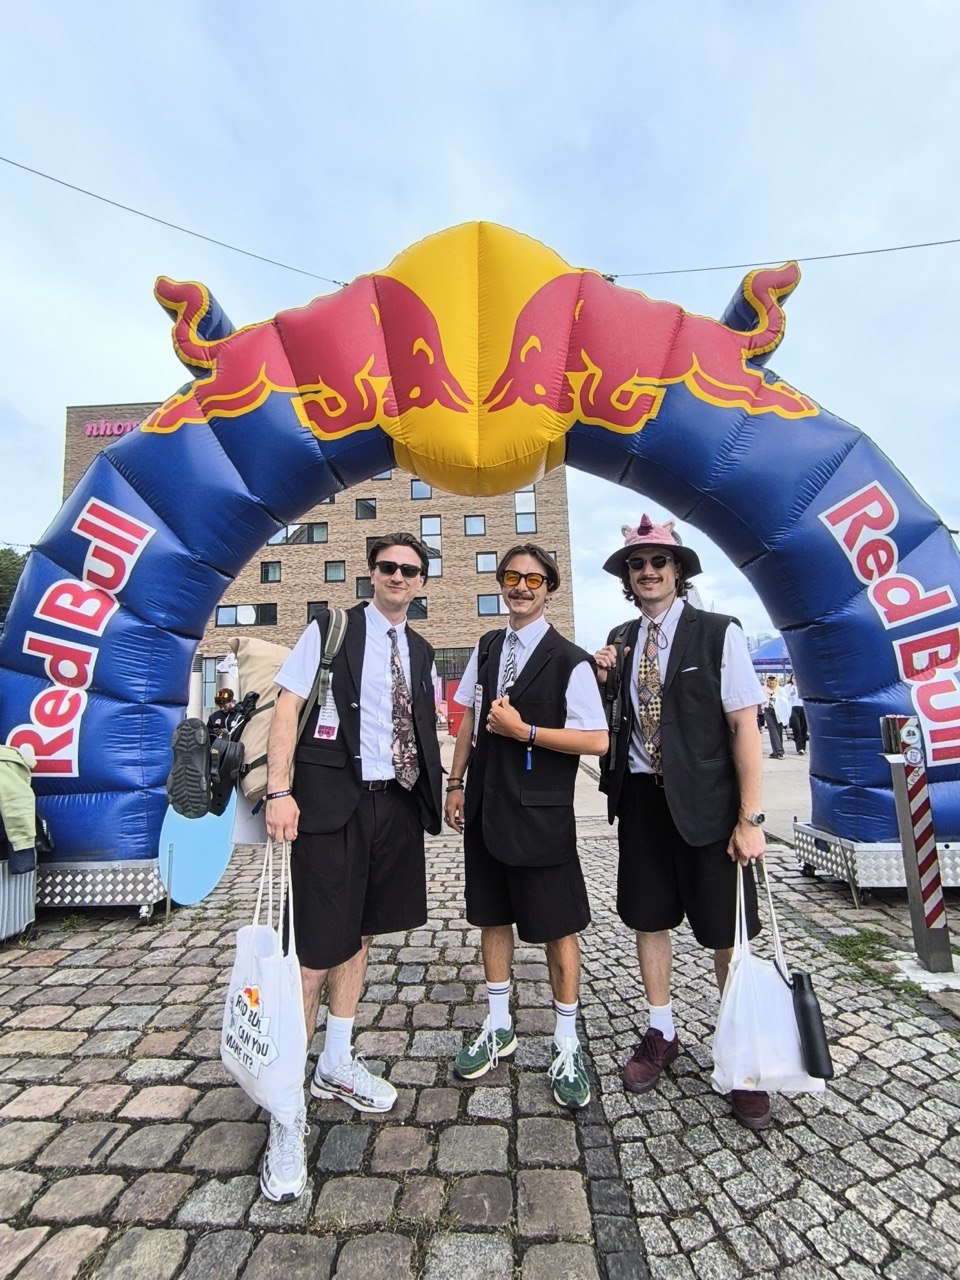 На фото изображены два участника команды   GRUZOVIK на конкурсе "Red Bull Can You Make It?". На фото они спят где-то на полу.   Подпись: Так ребята выглядели на финише. 